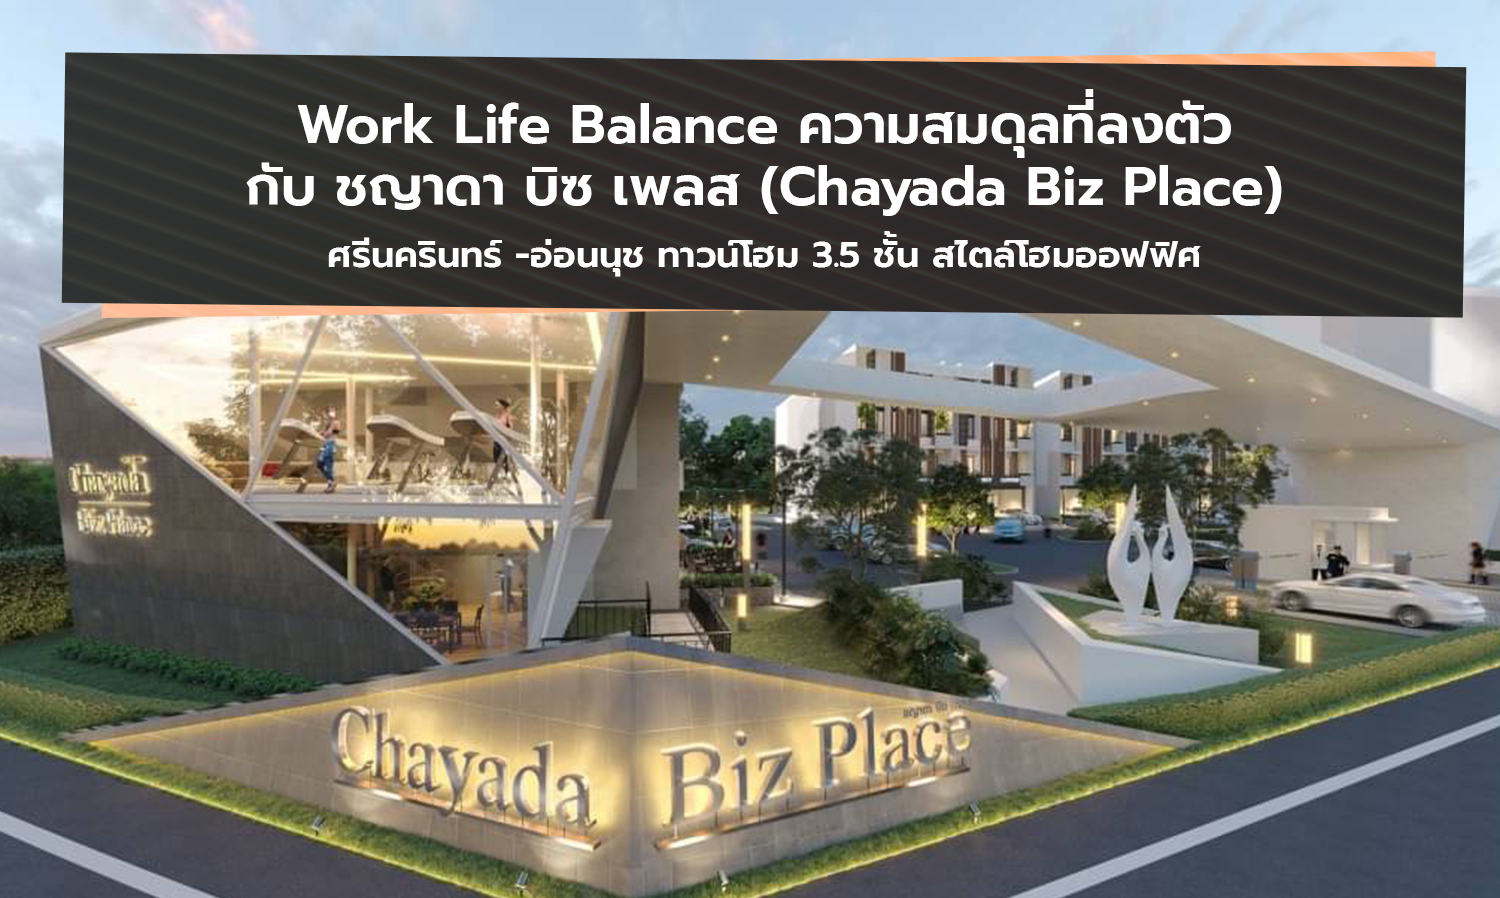 work-life-balance-ความสมดุลที่ลงตัวกับ-ชญาดา-บ-